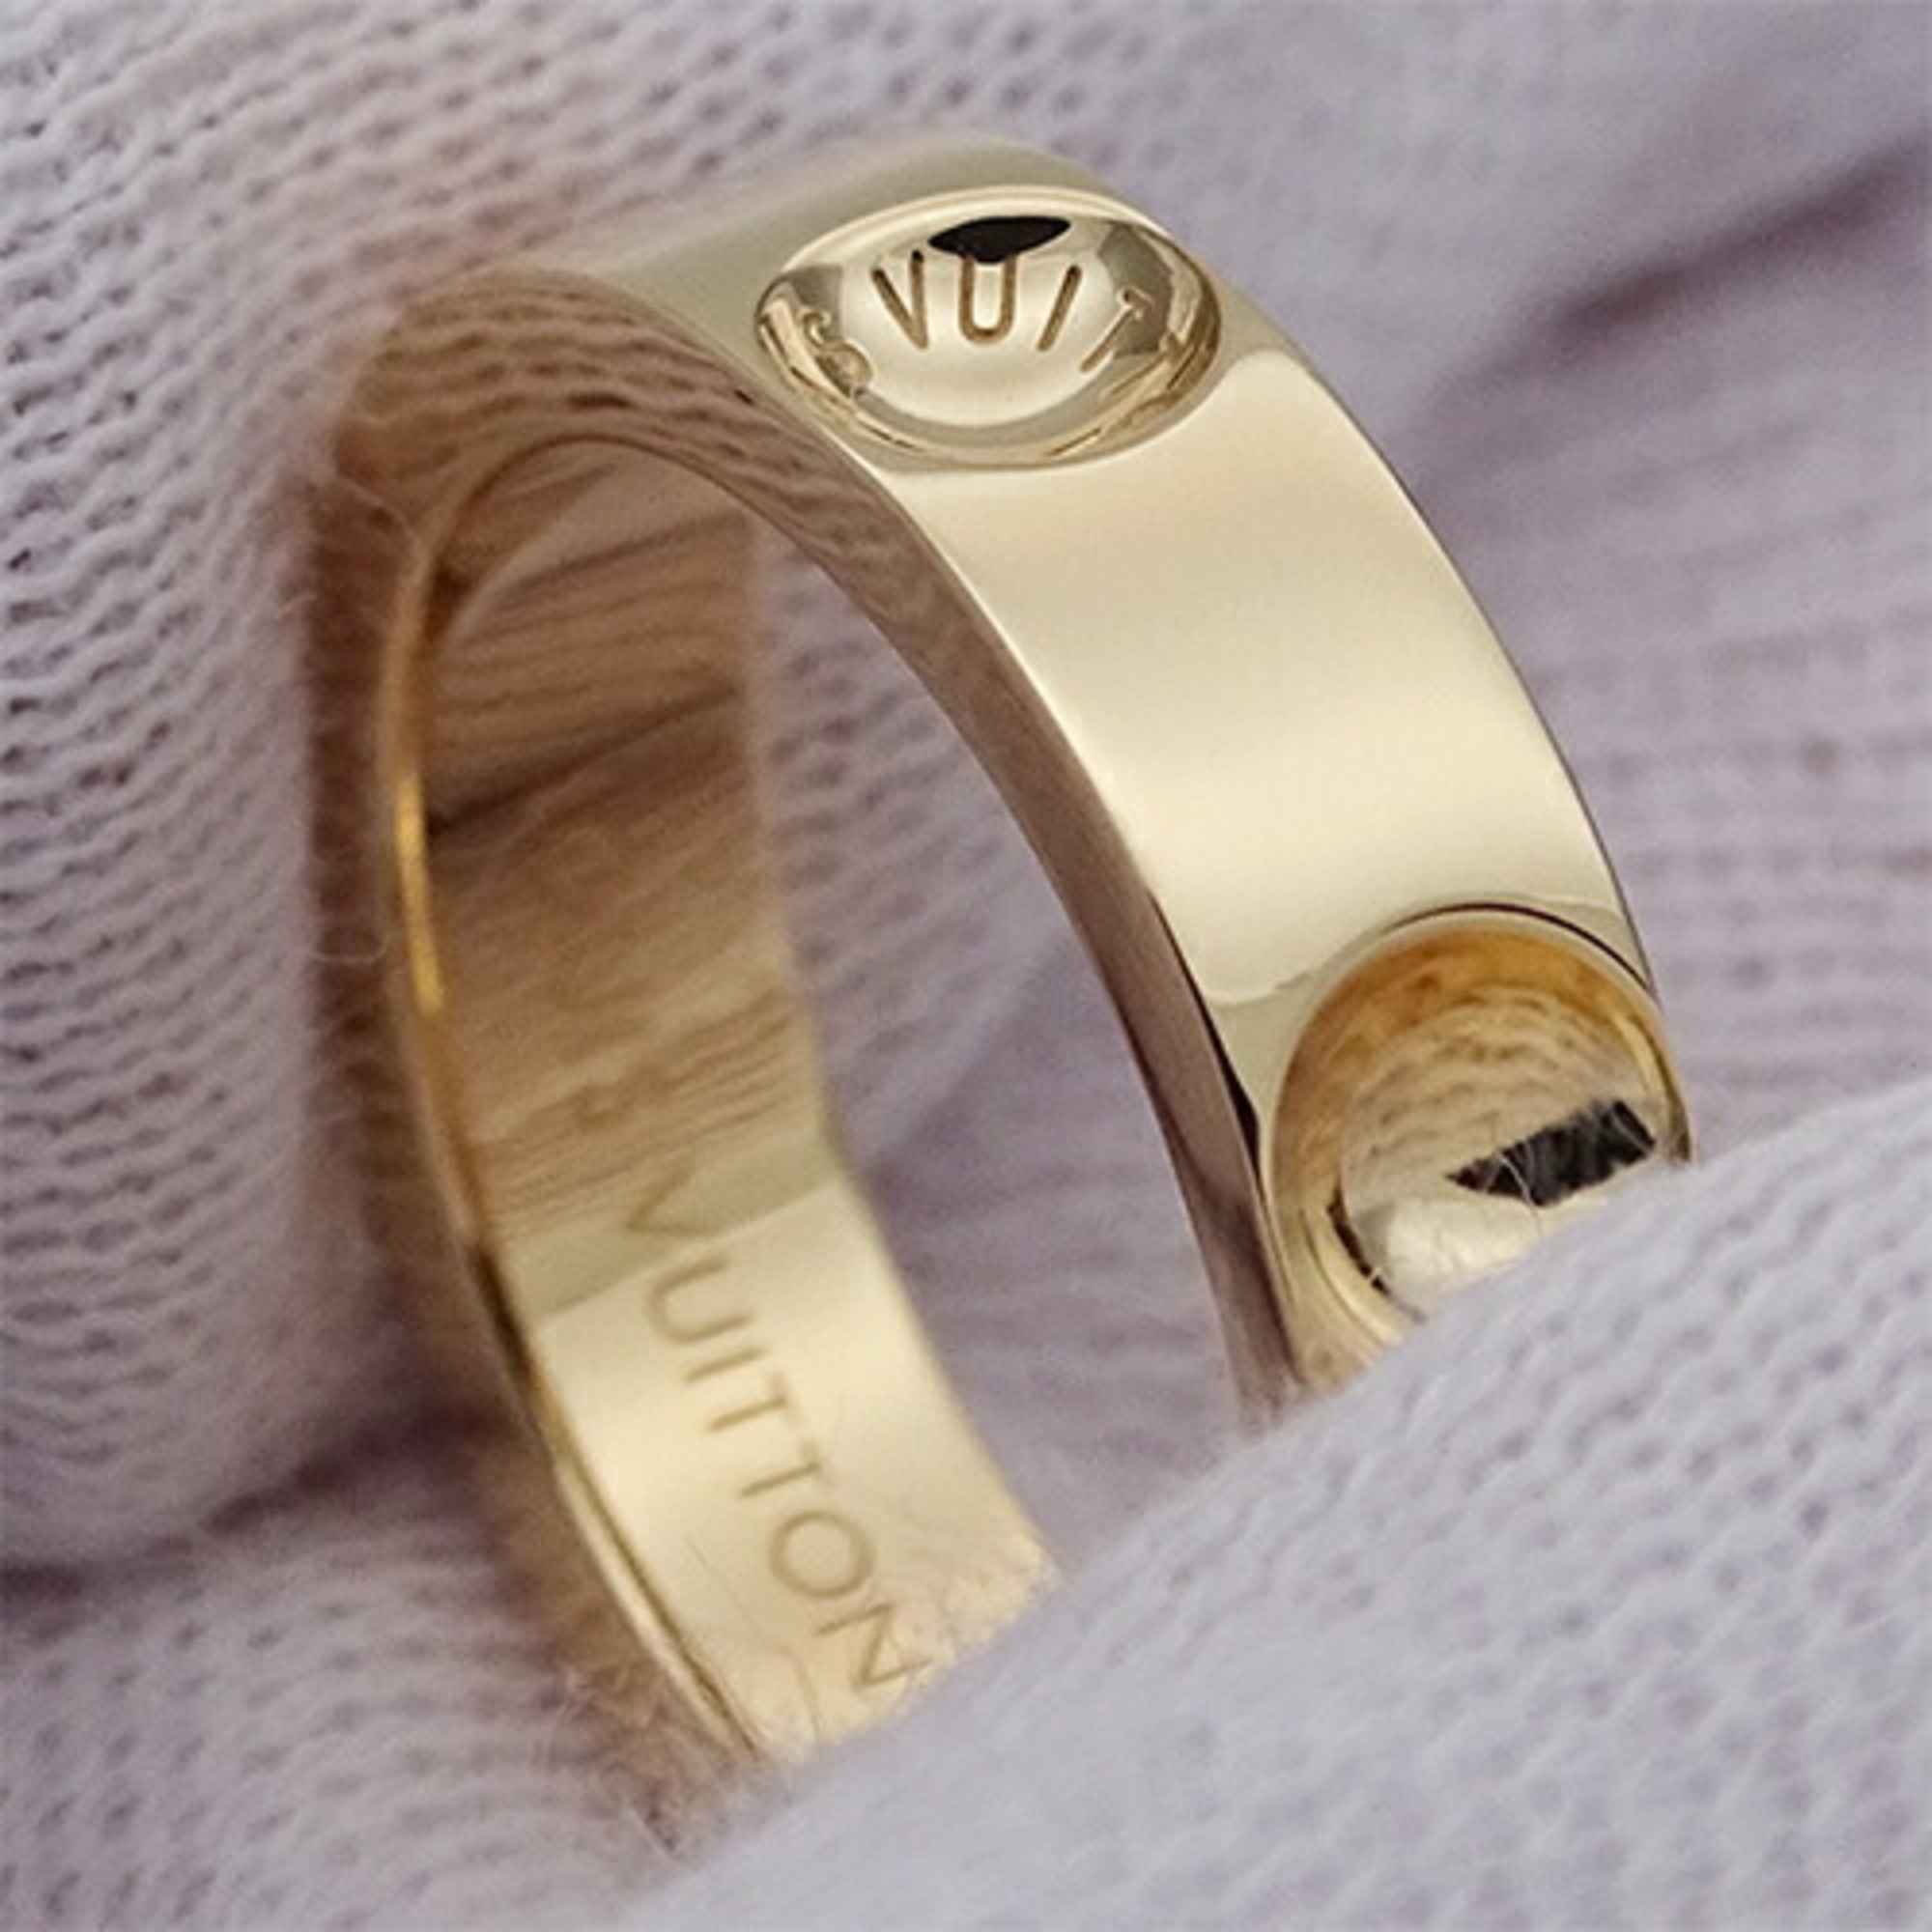 Louis Vuitton LOUIS VUITTON Ring for Women, 750YG Petite Bourg Empreinte Yellow Gold